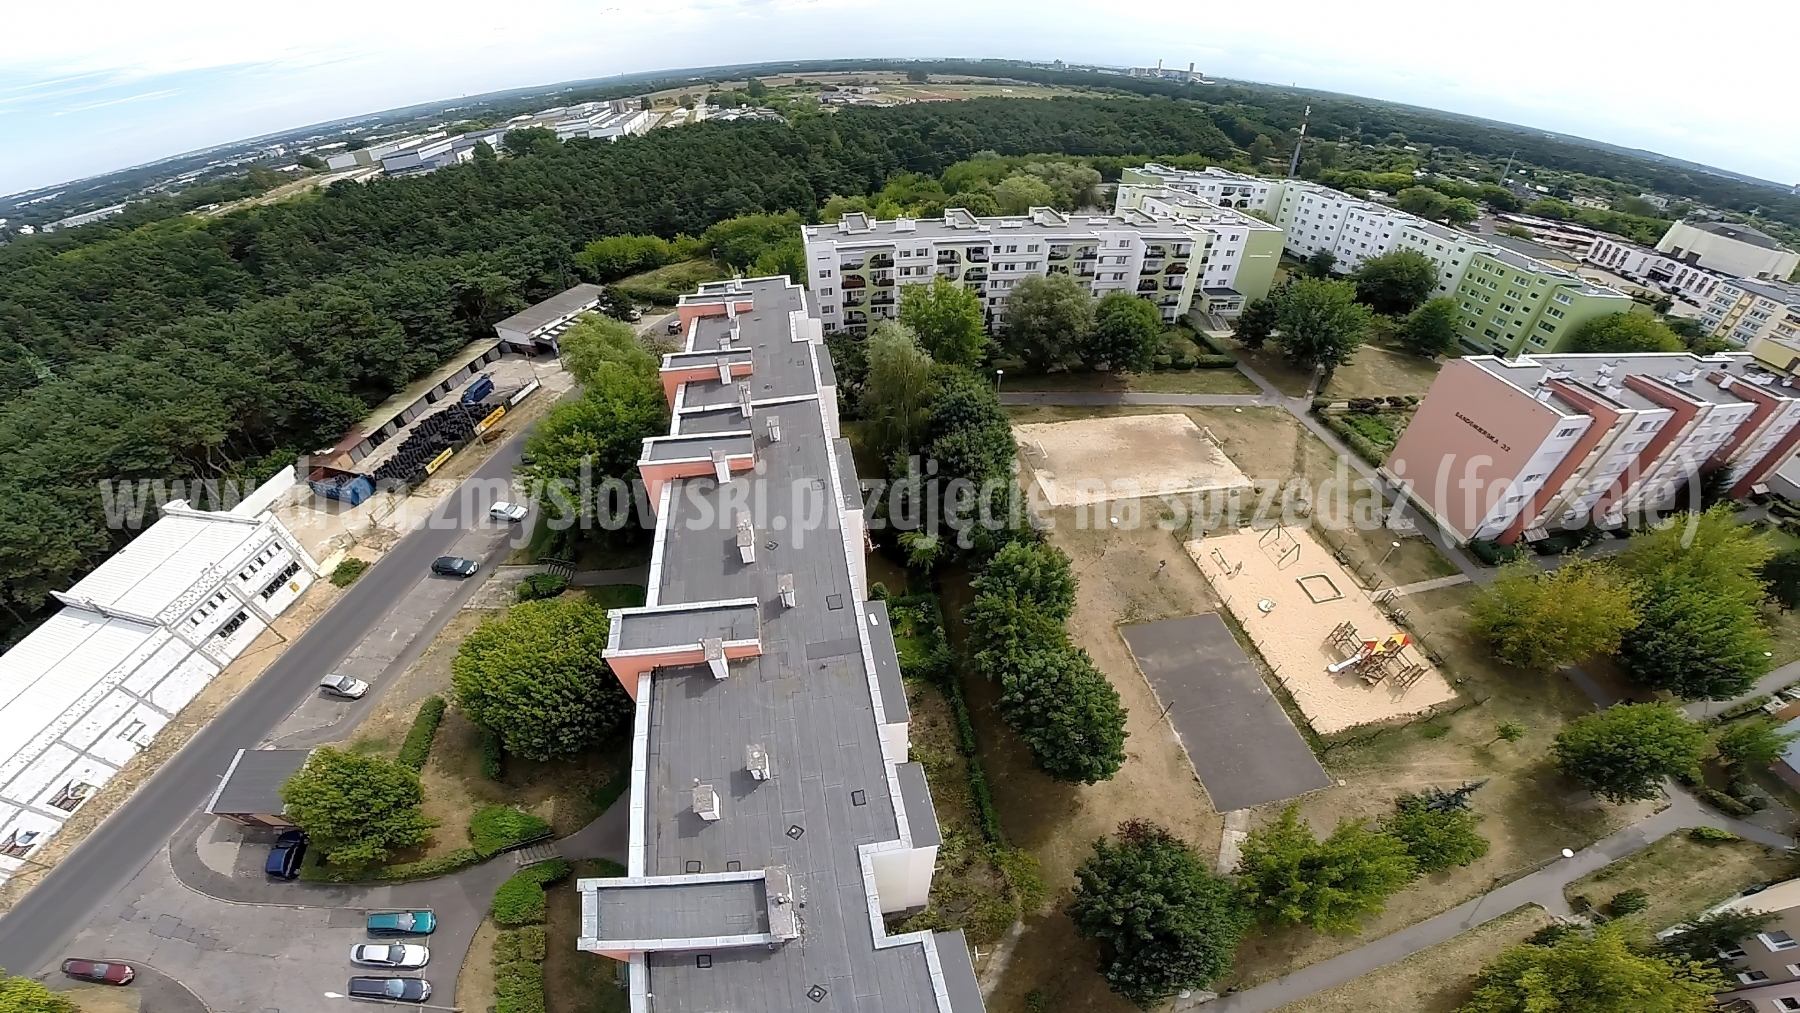 2014-08-01-dron-na-Sandomierskiej-015-gigapixel-standard-width-3840px-SharpenAI-Motion